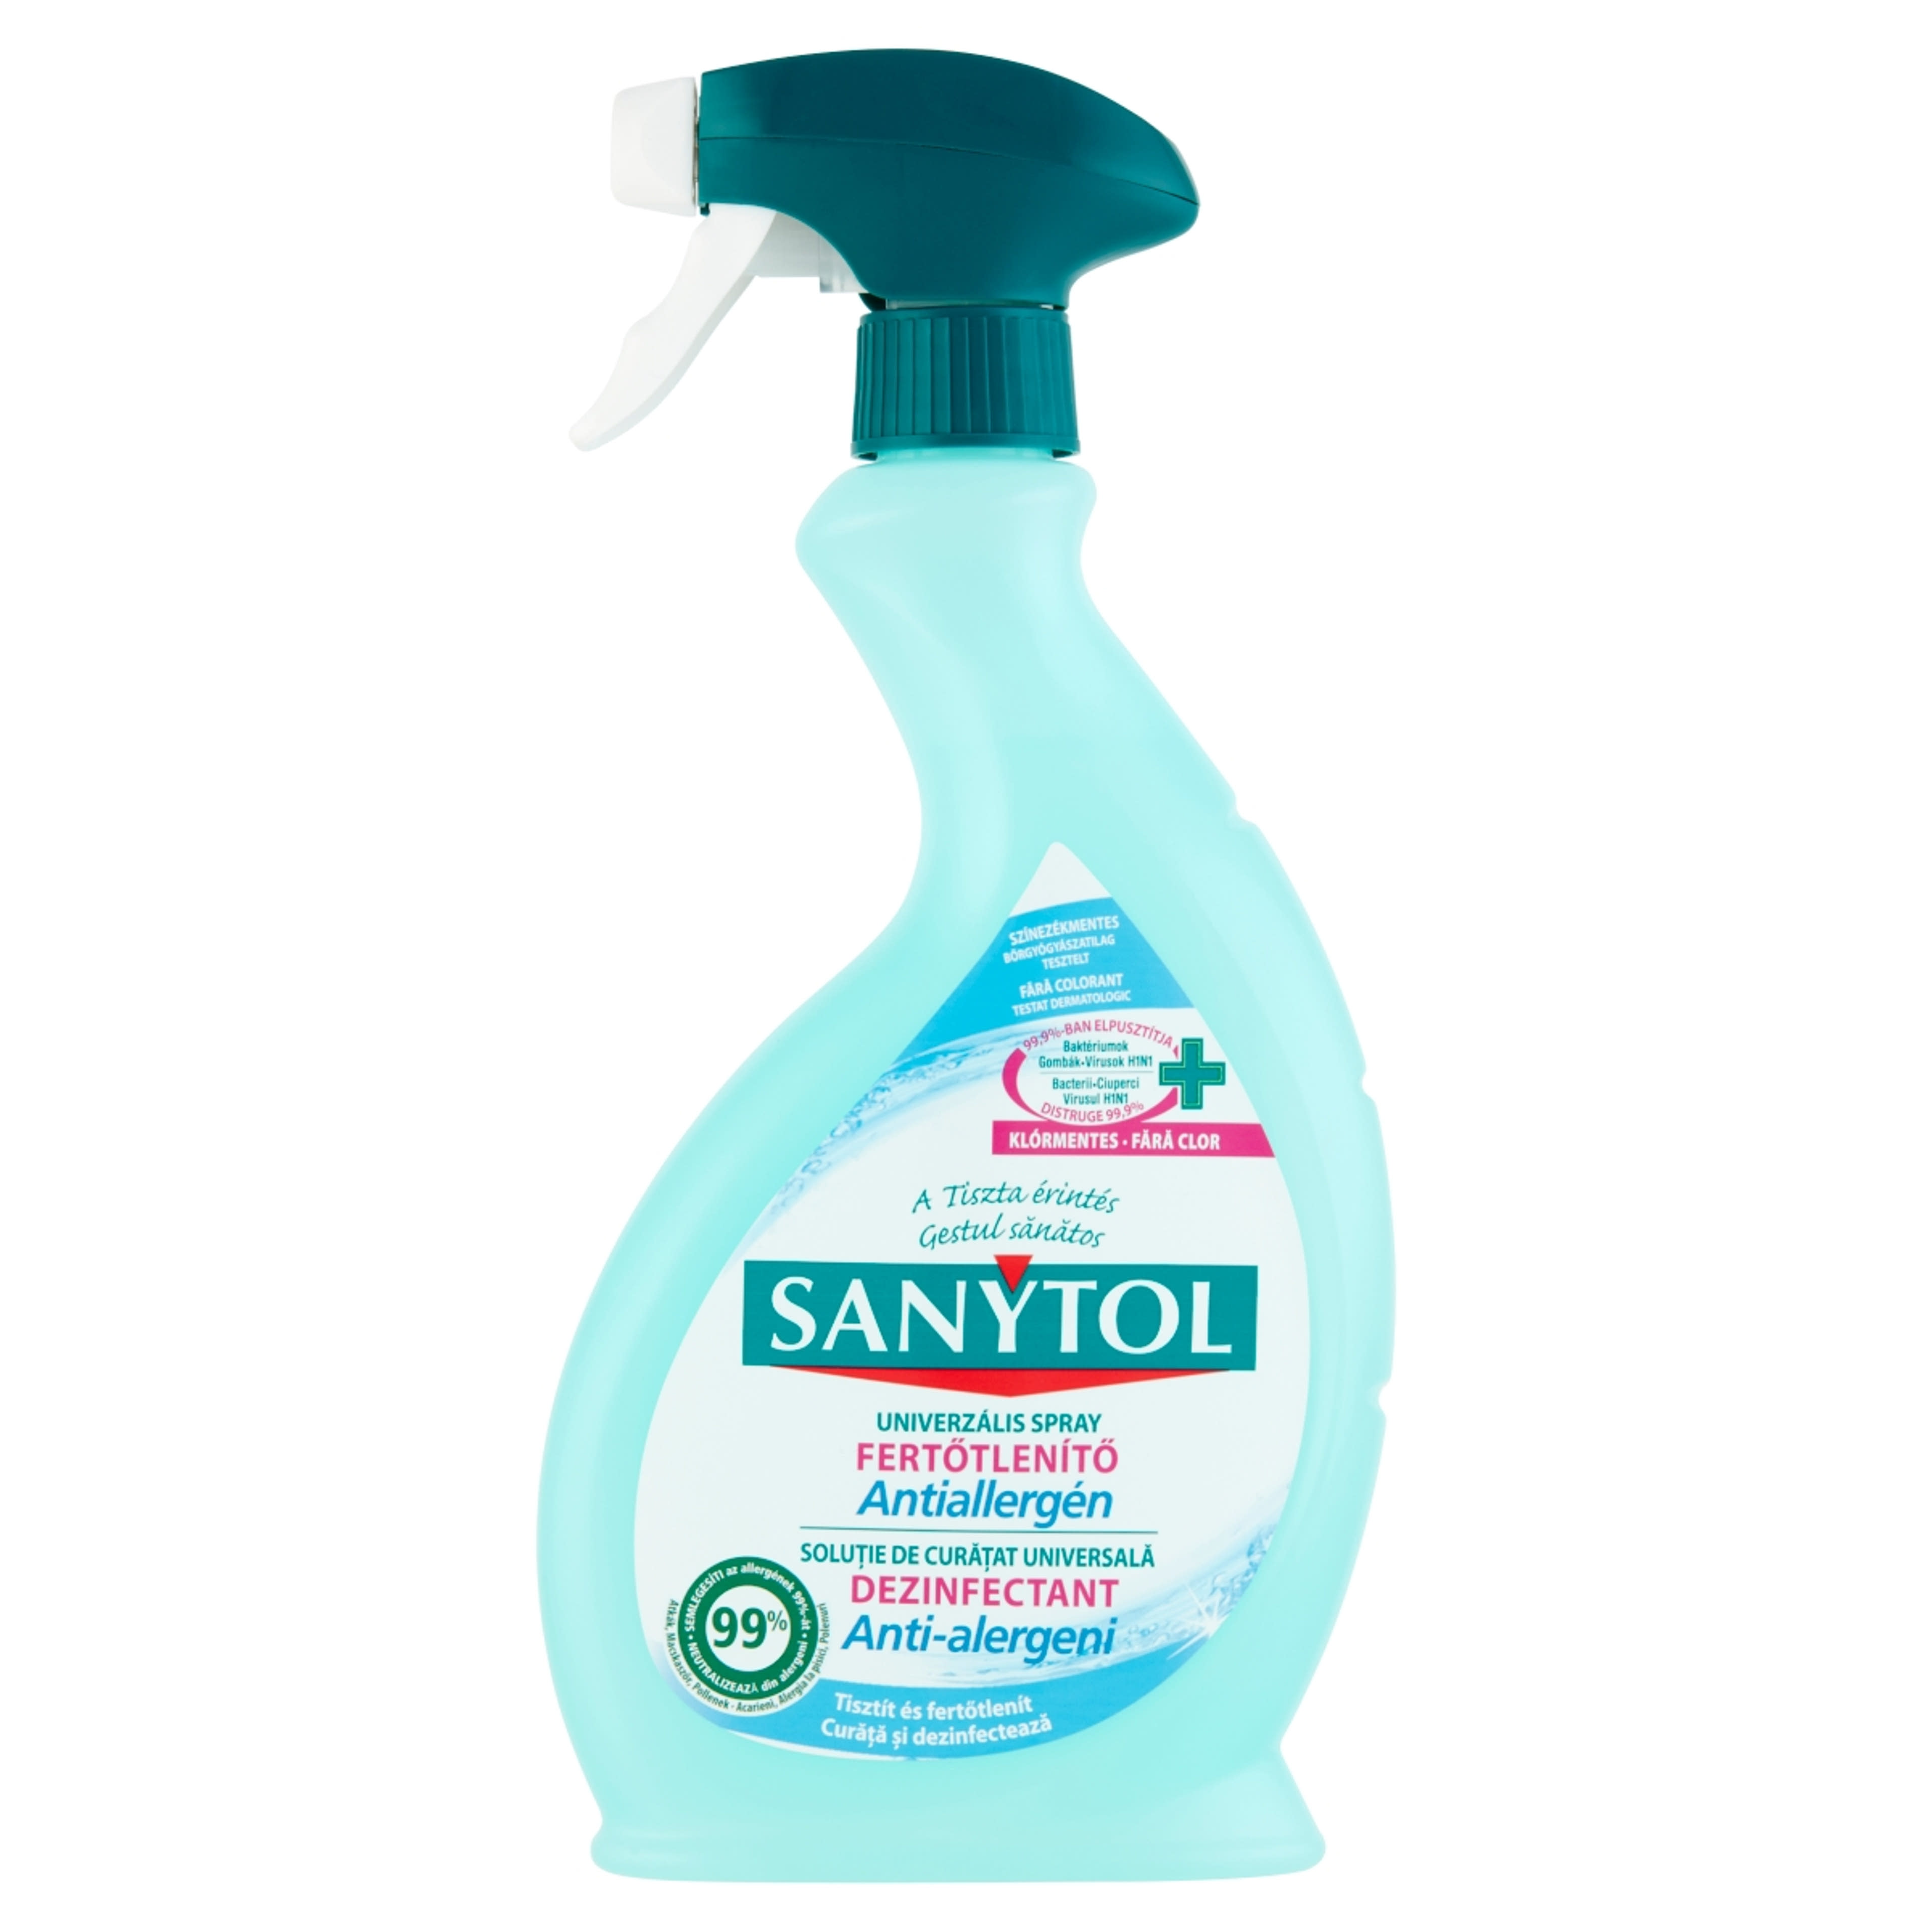 Sanytol Fertotleníto Antiallergén Universal Spray - 500 ml-1